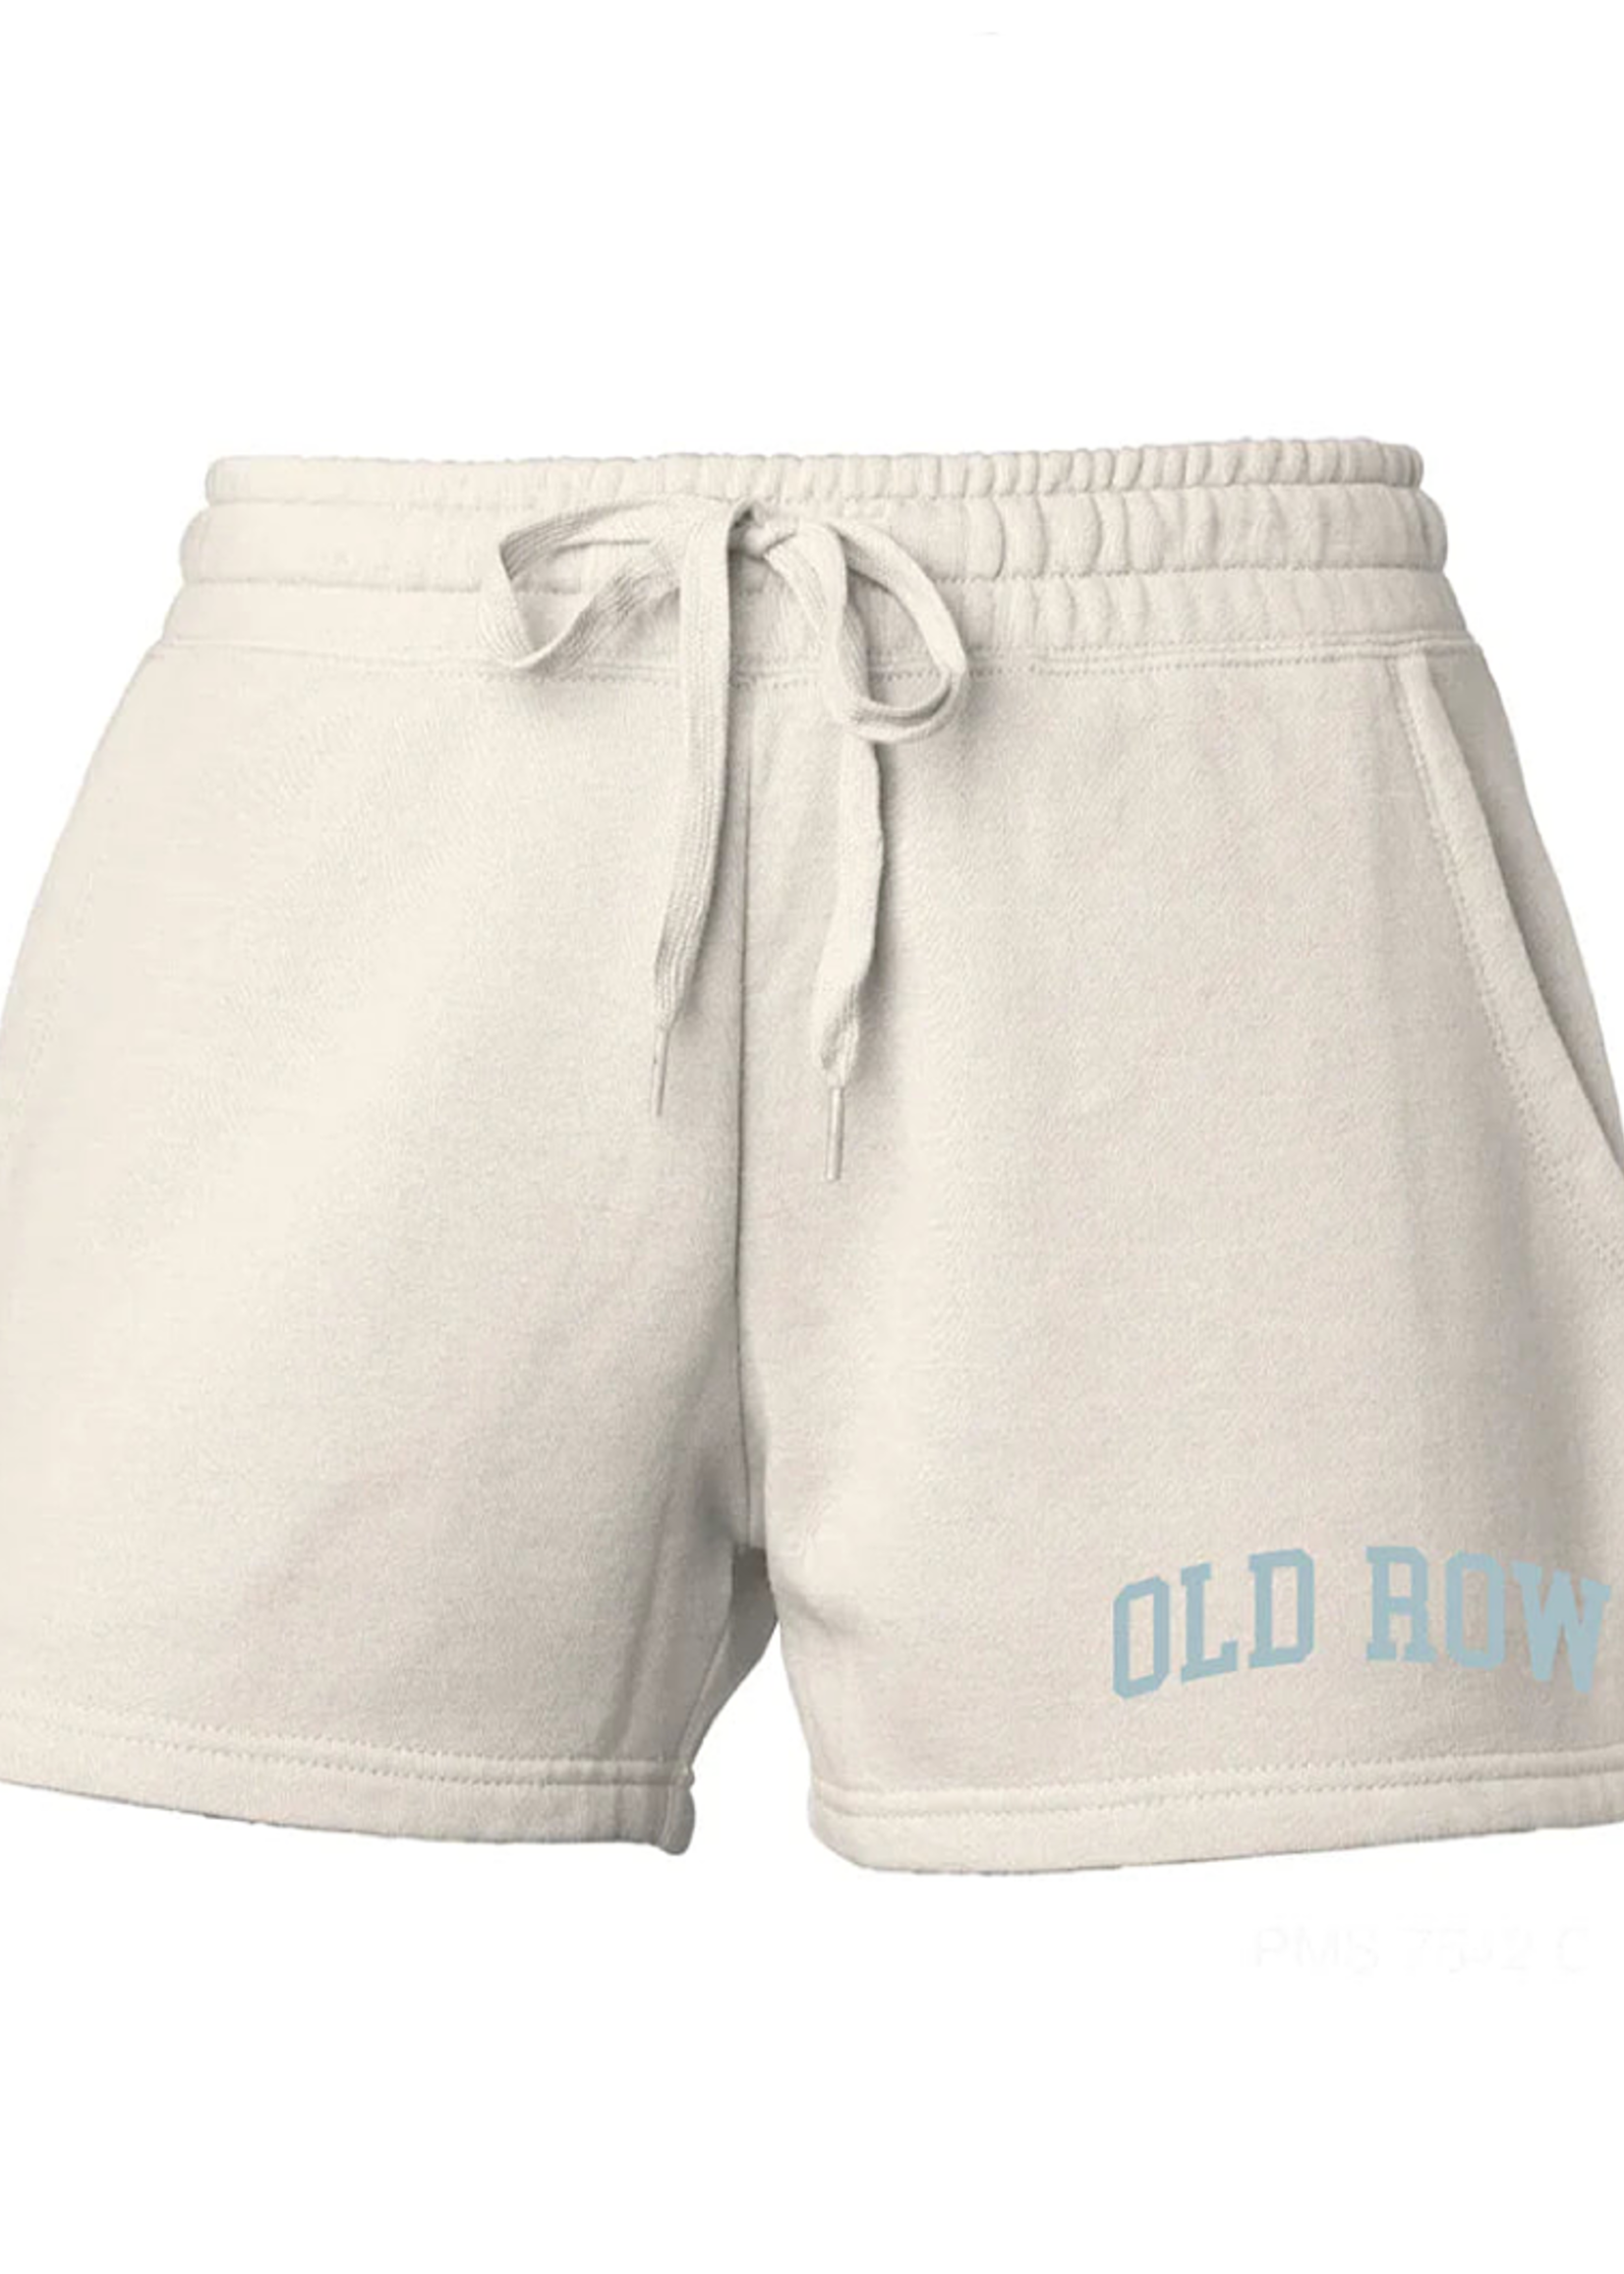 Old Row Old Row Oatmeal Sweat Shorts